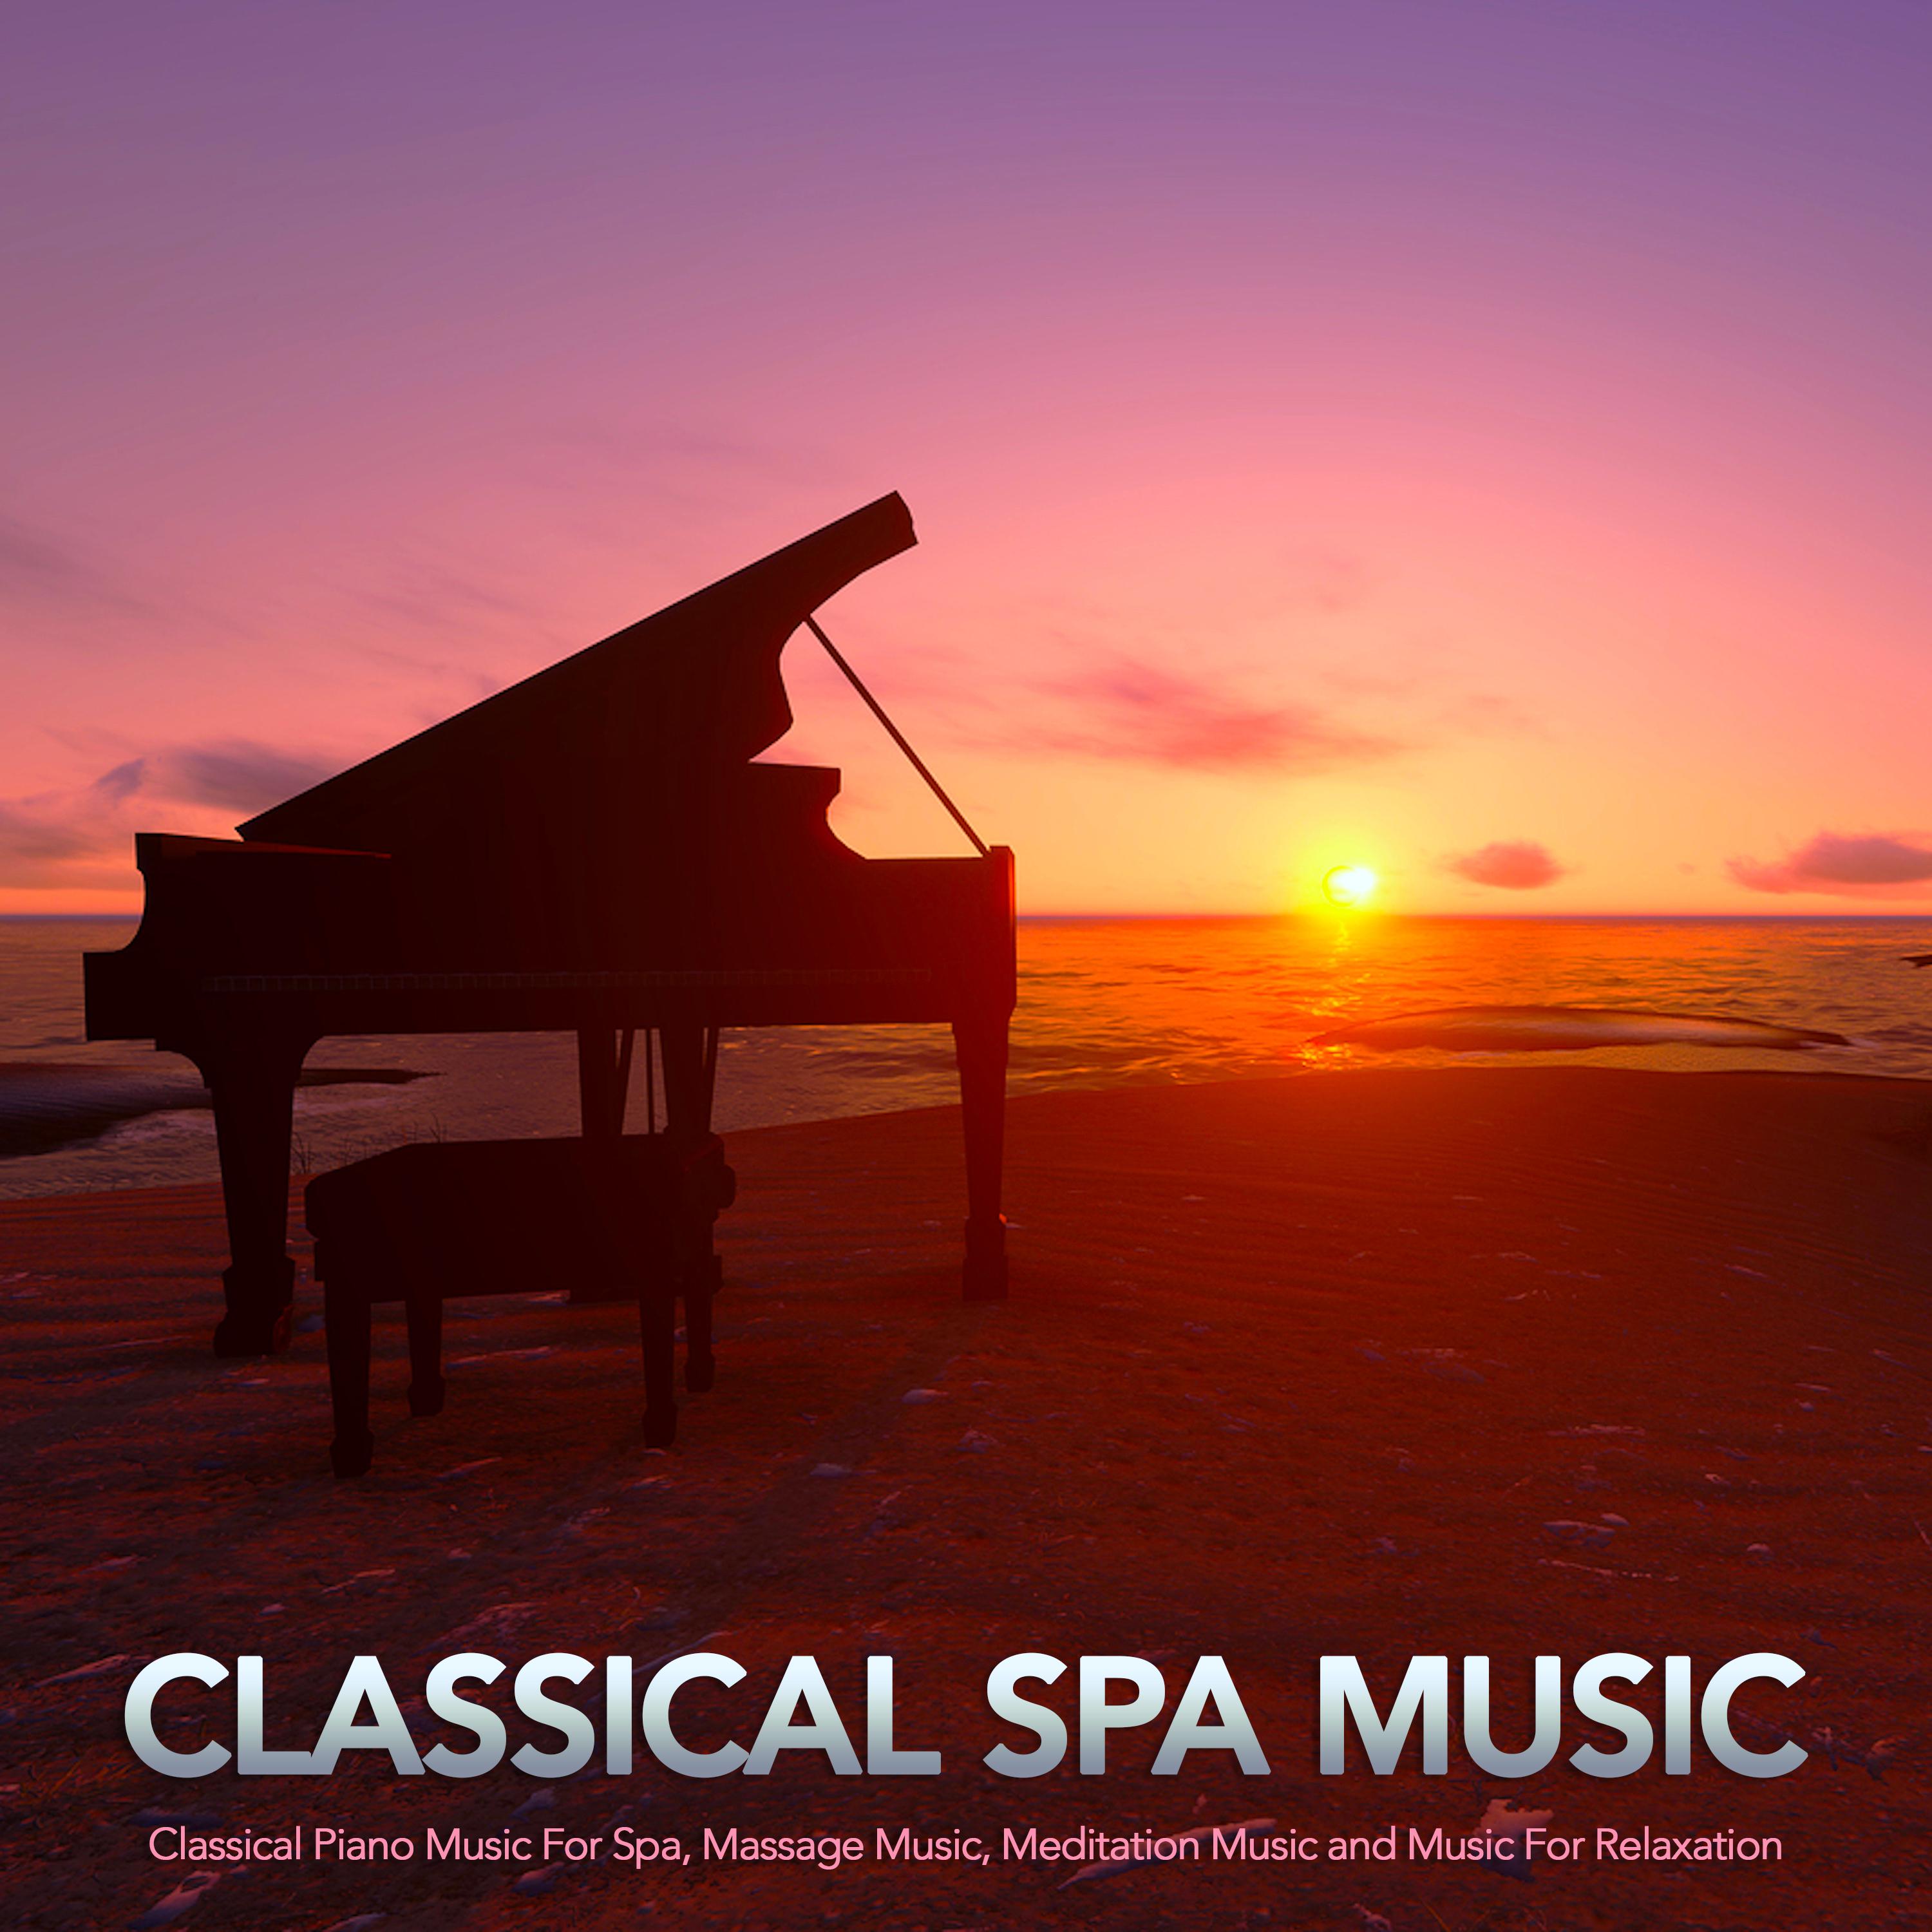 Song of Spring - Mendelssohn - Classical Piano Music - Spa Music